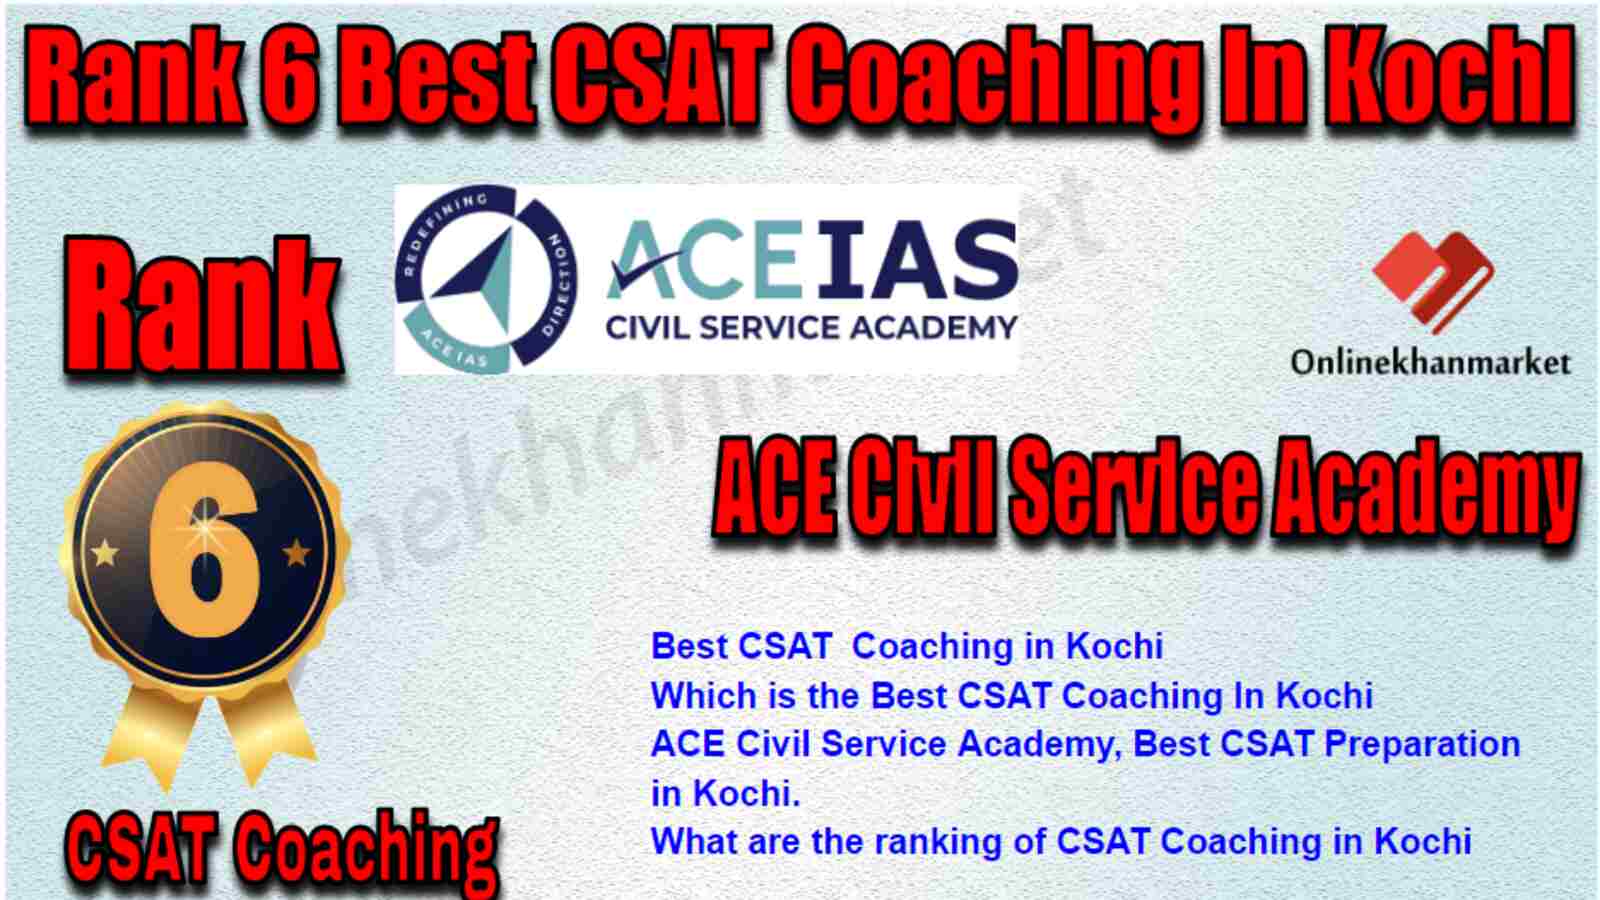 Rank 6 Best CSAT Coaching in Kochi